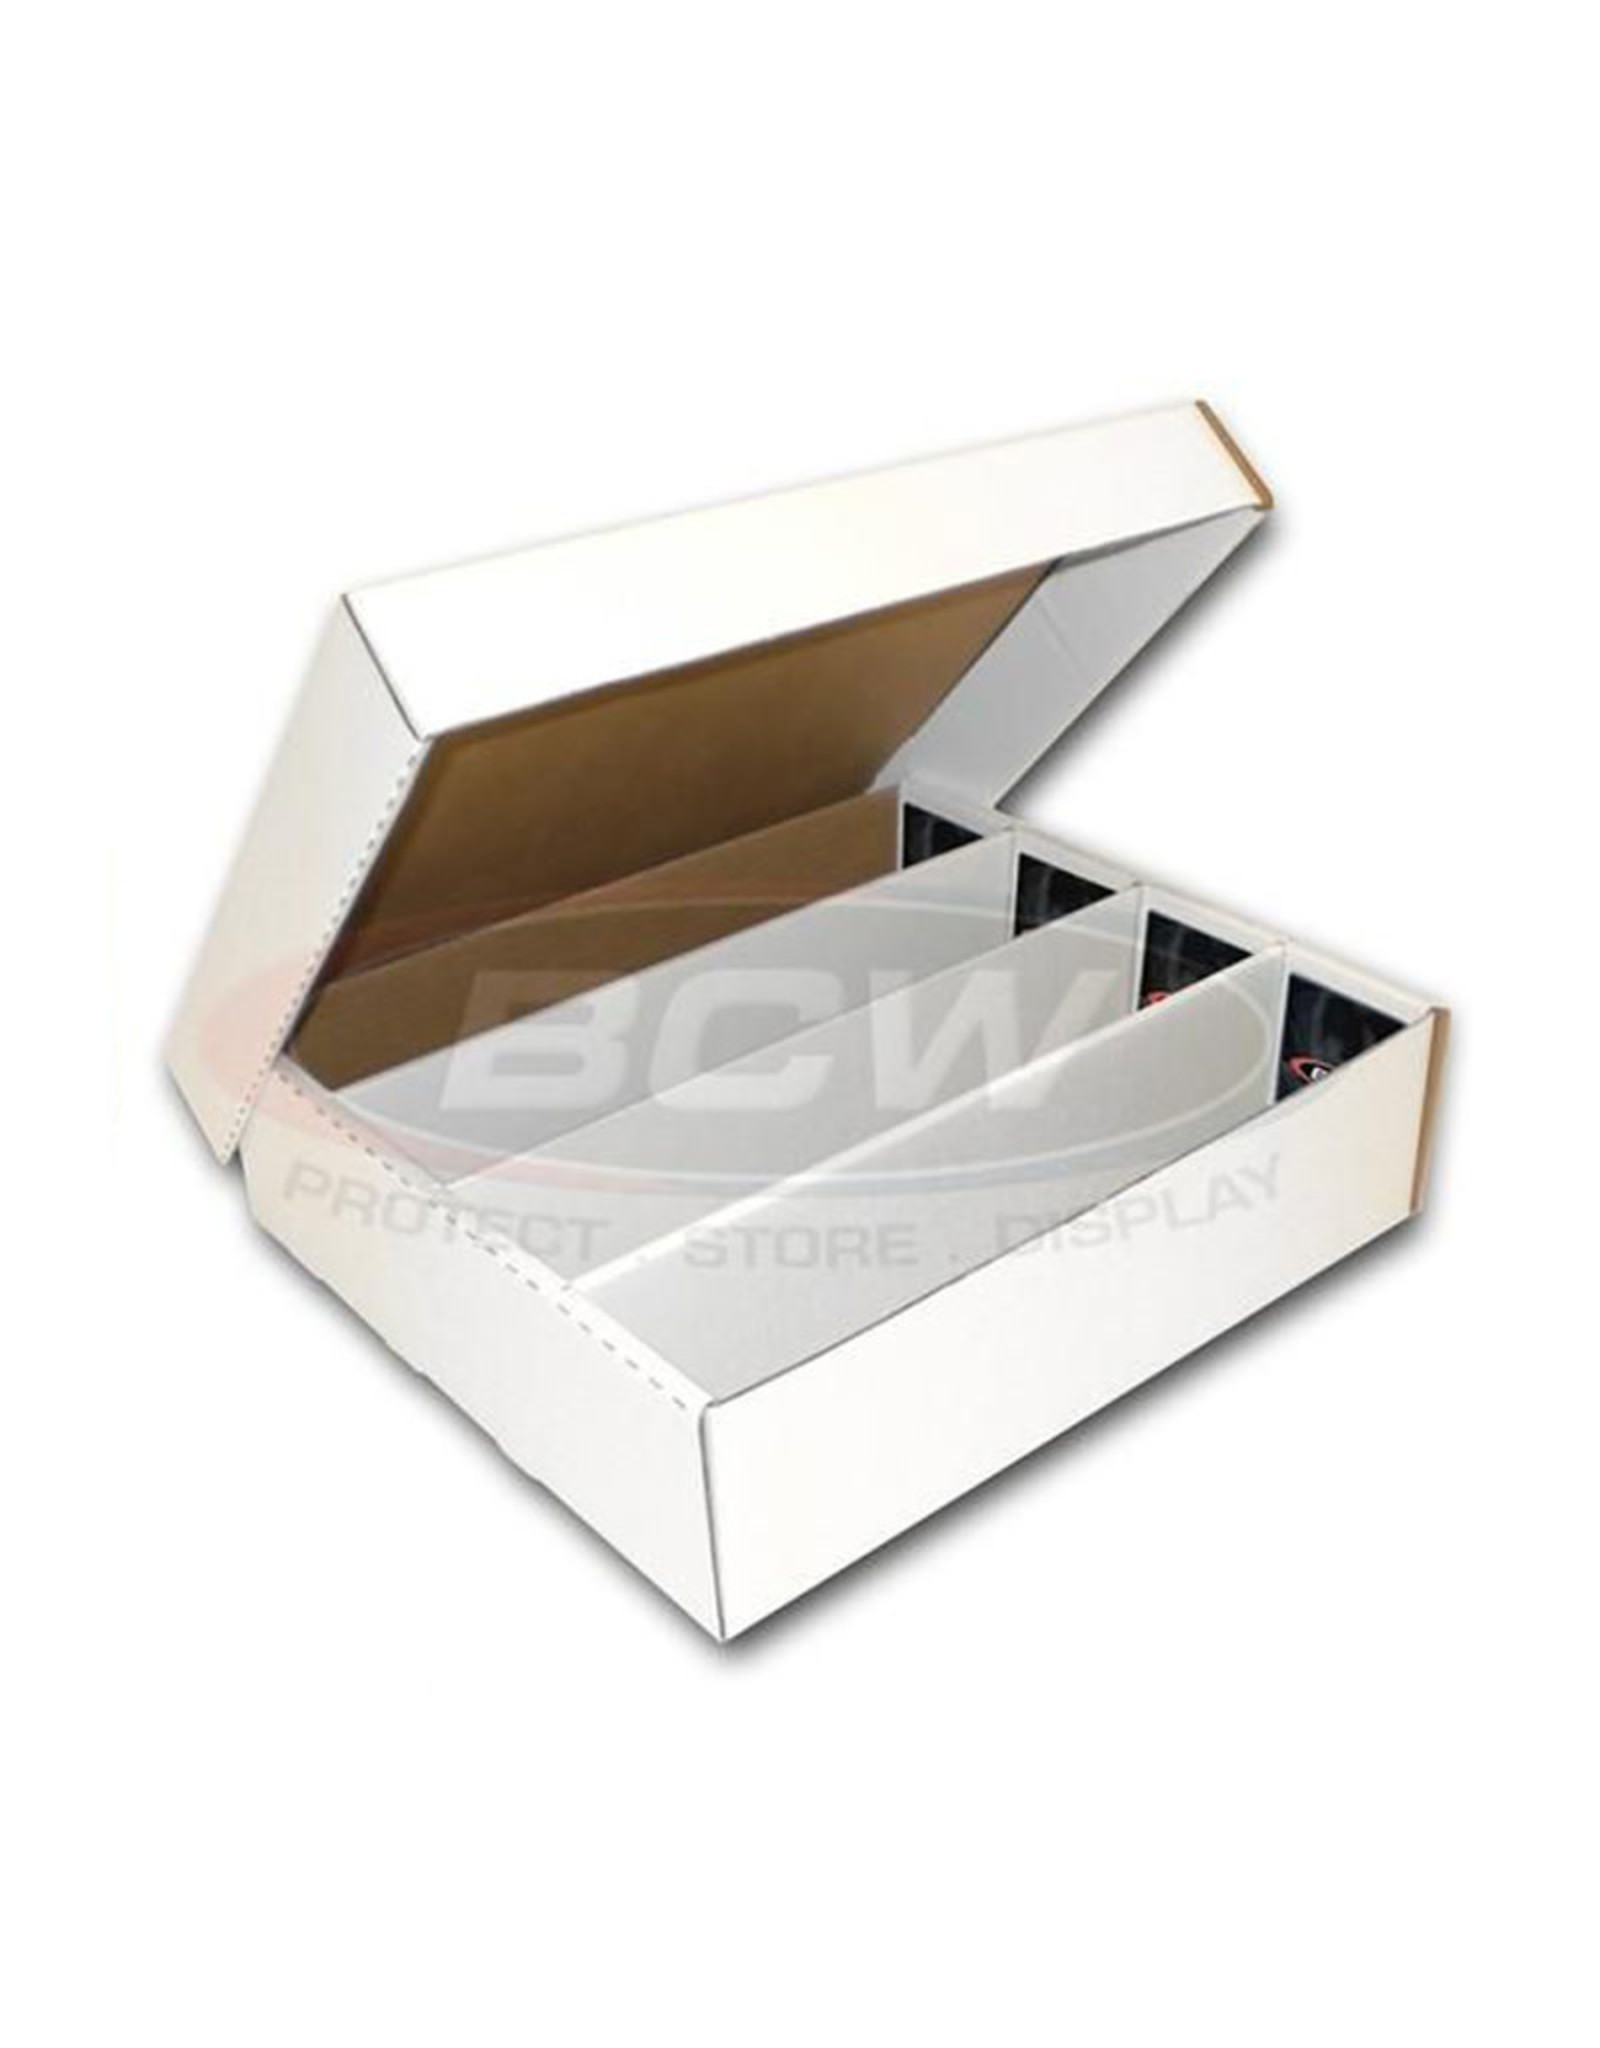 BCW BCW Cardboard Box "Monster" (3200-Card Capacity - 4 Row)